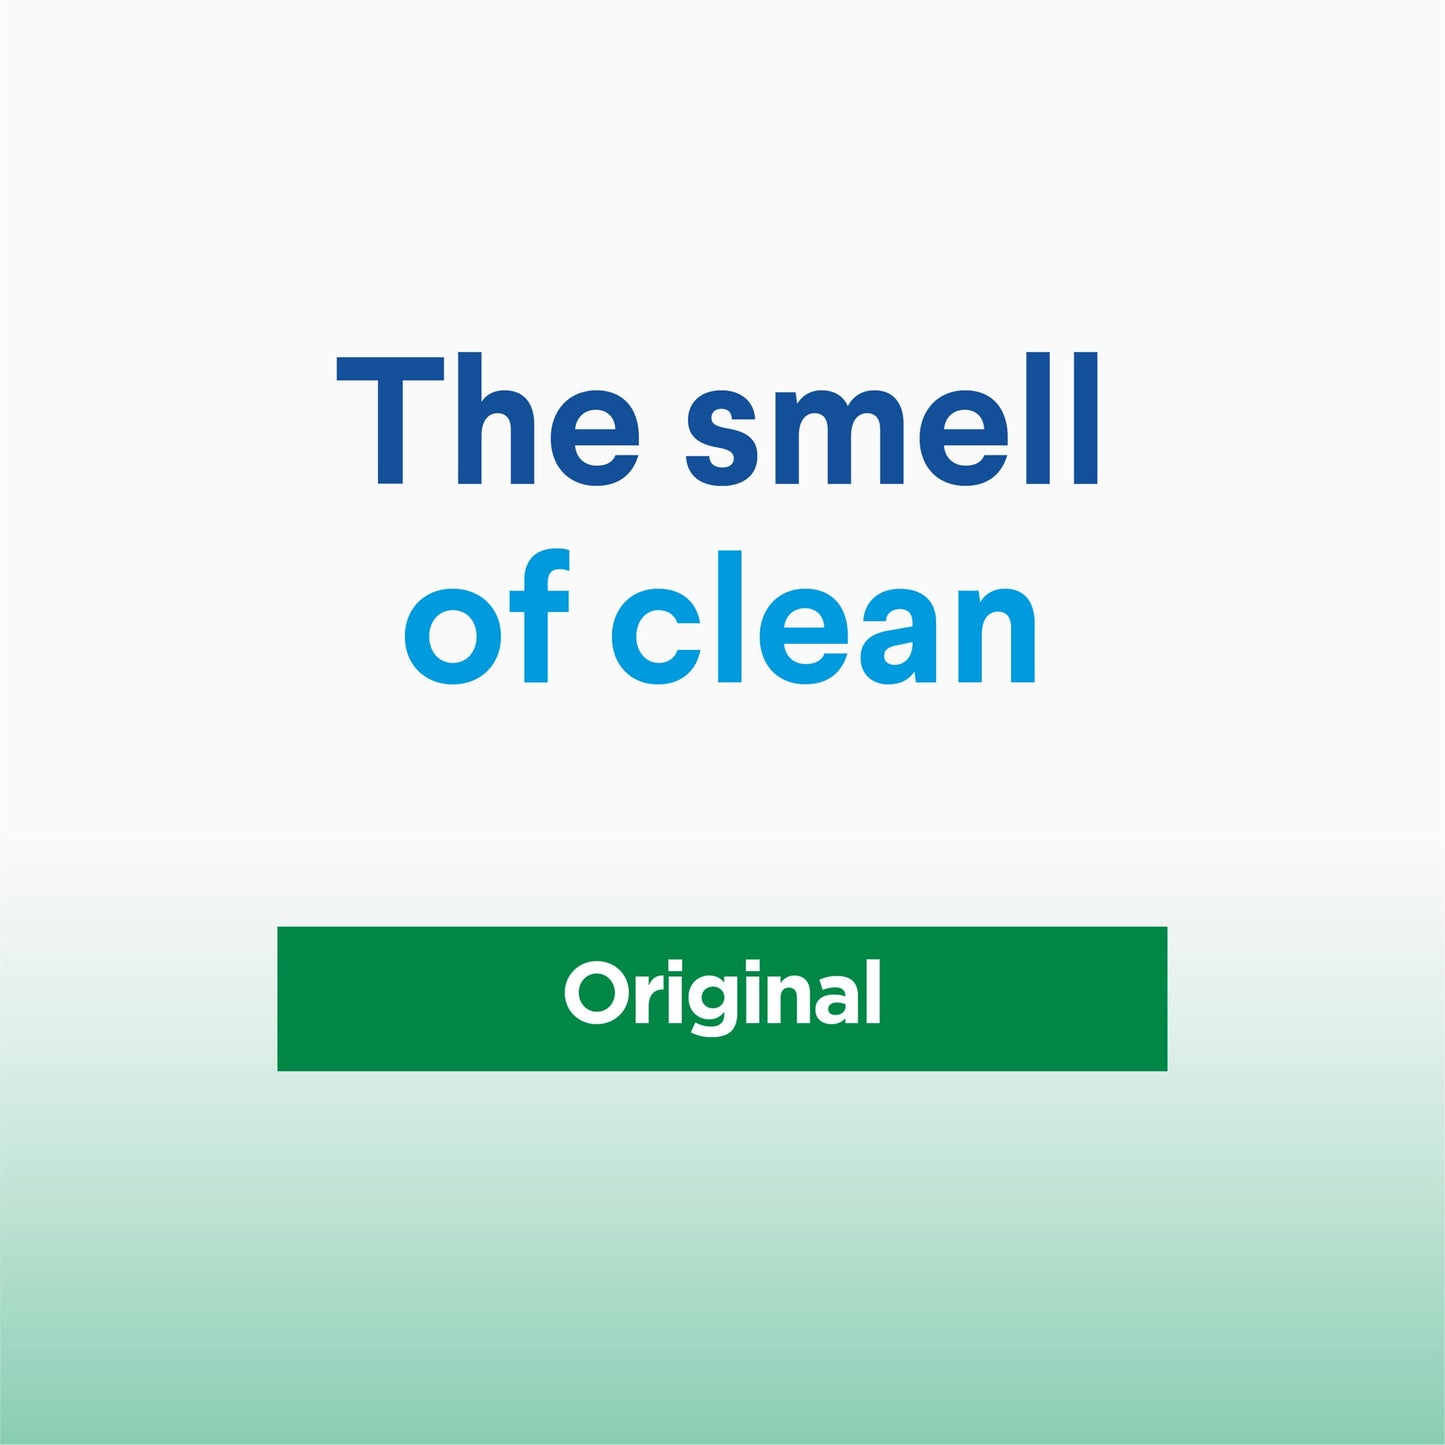 Clorox Clean-Up All Purpose Cleaner Spray with Bleach, Spray Bottle, Original, 32 oz